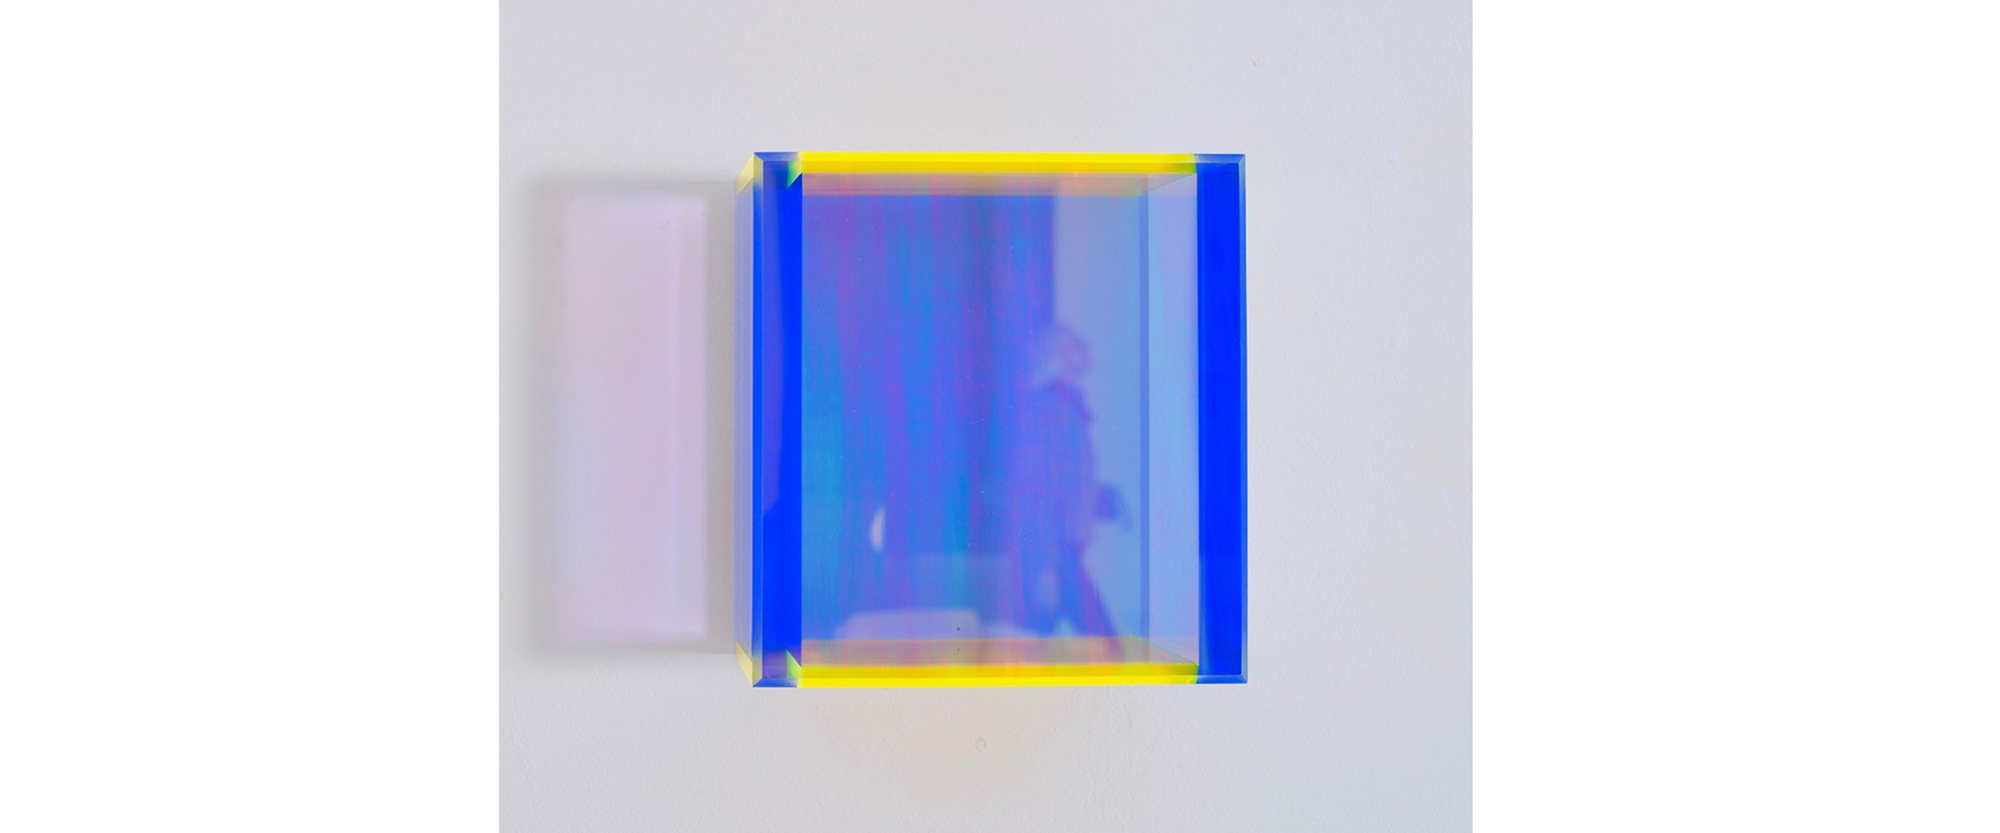 color mirror rainbow pastel blue honkong - 2020, Acrylglas, fluoreszierend, Edition von 6, 21 x 20 x 11 cm